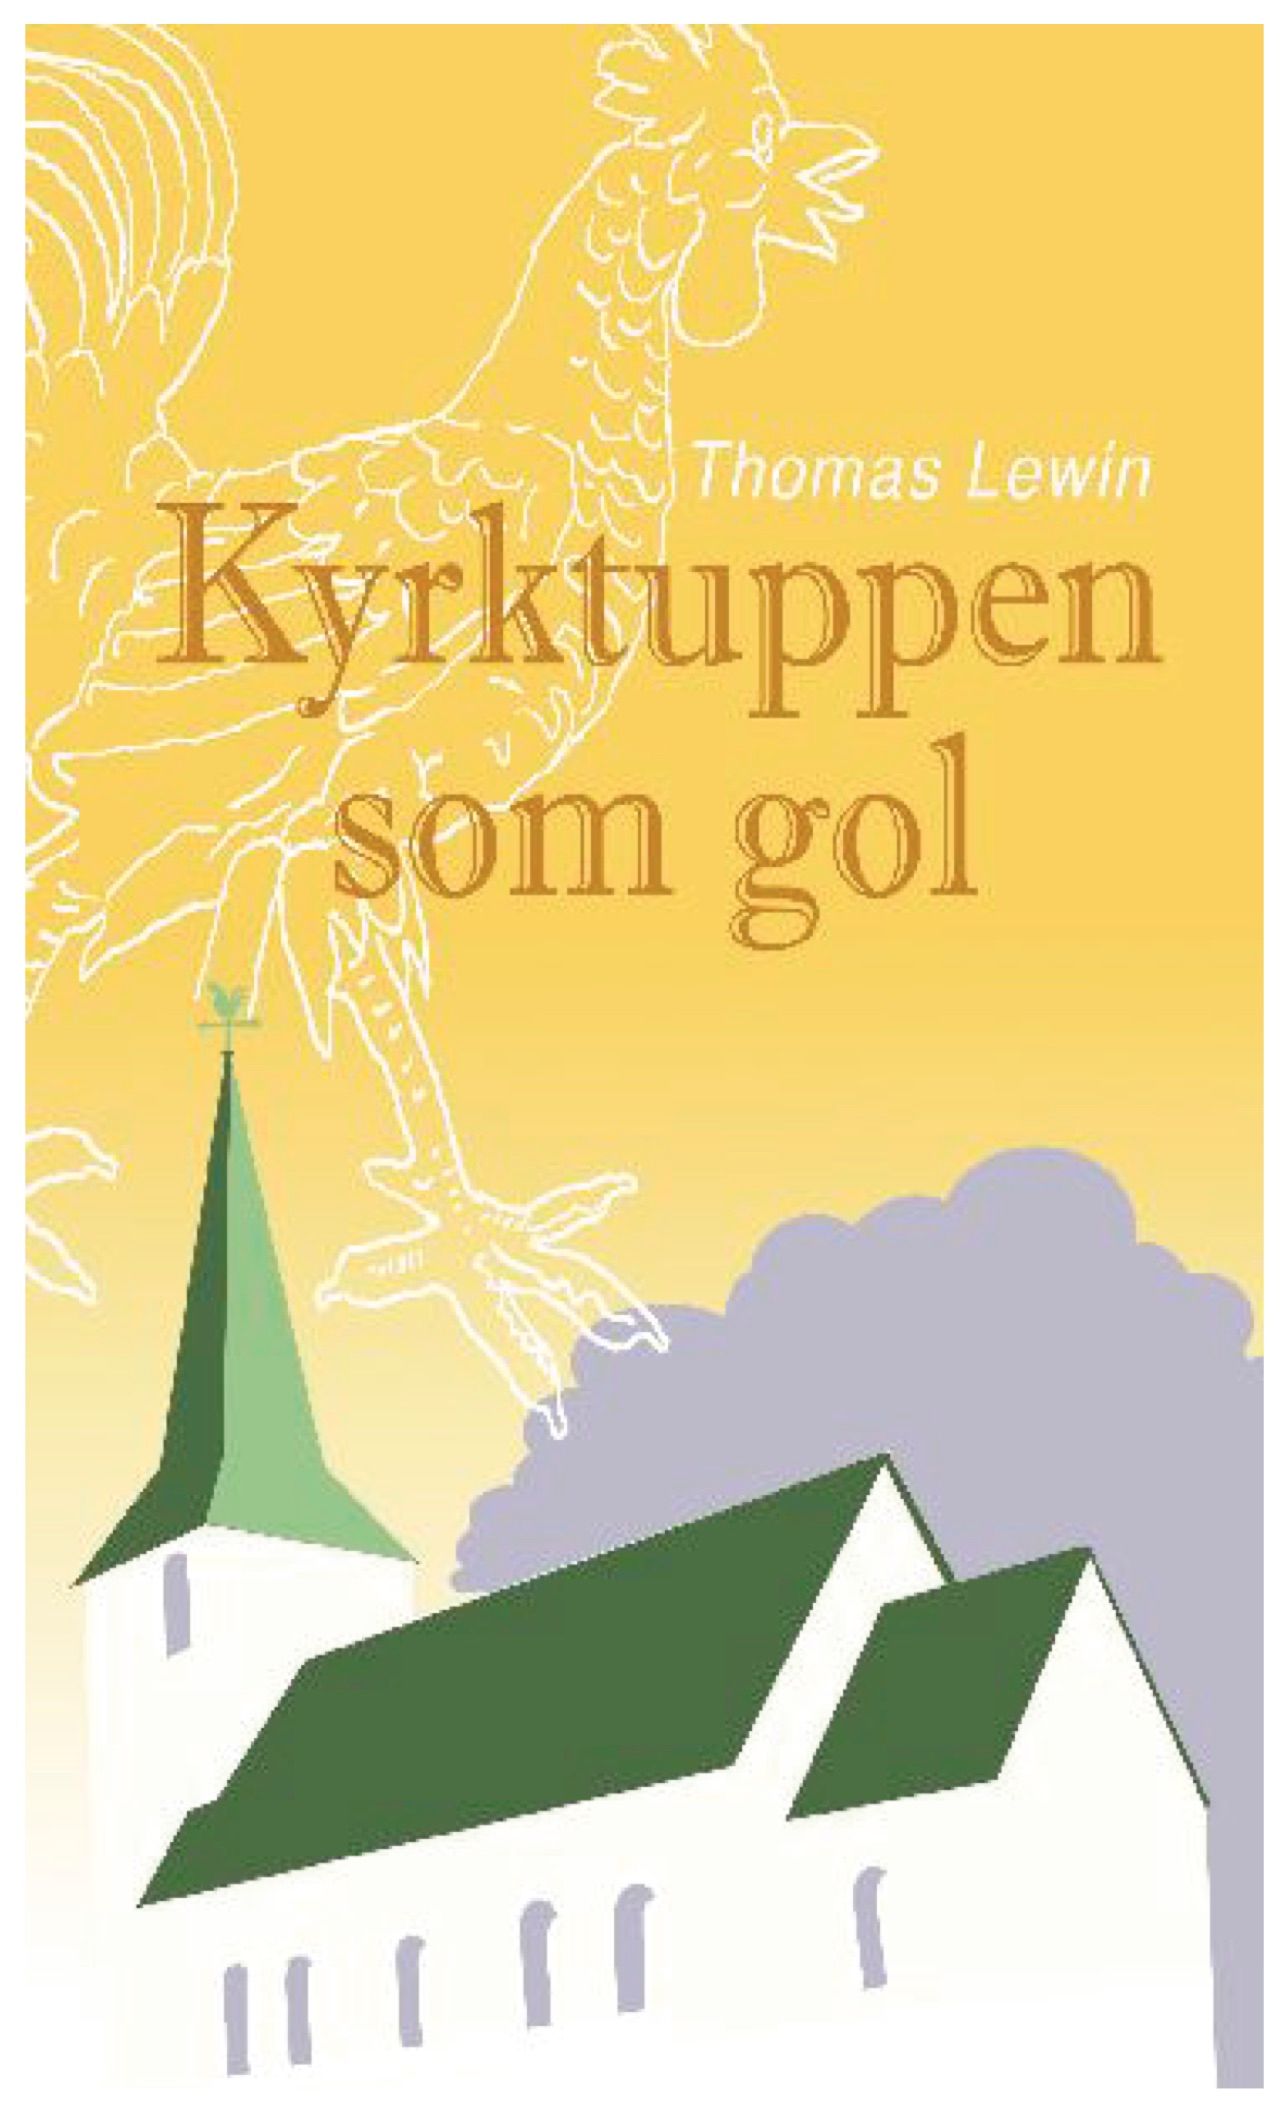 Kyrktuppen som gol, e-bok av Thomas Lewin